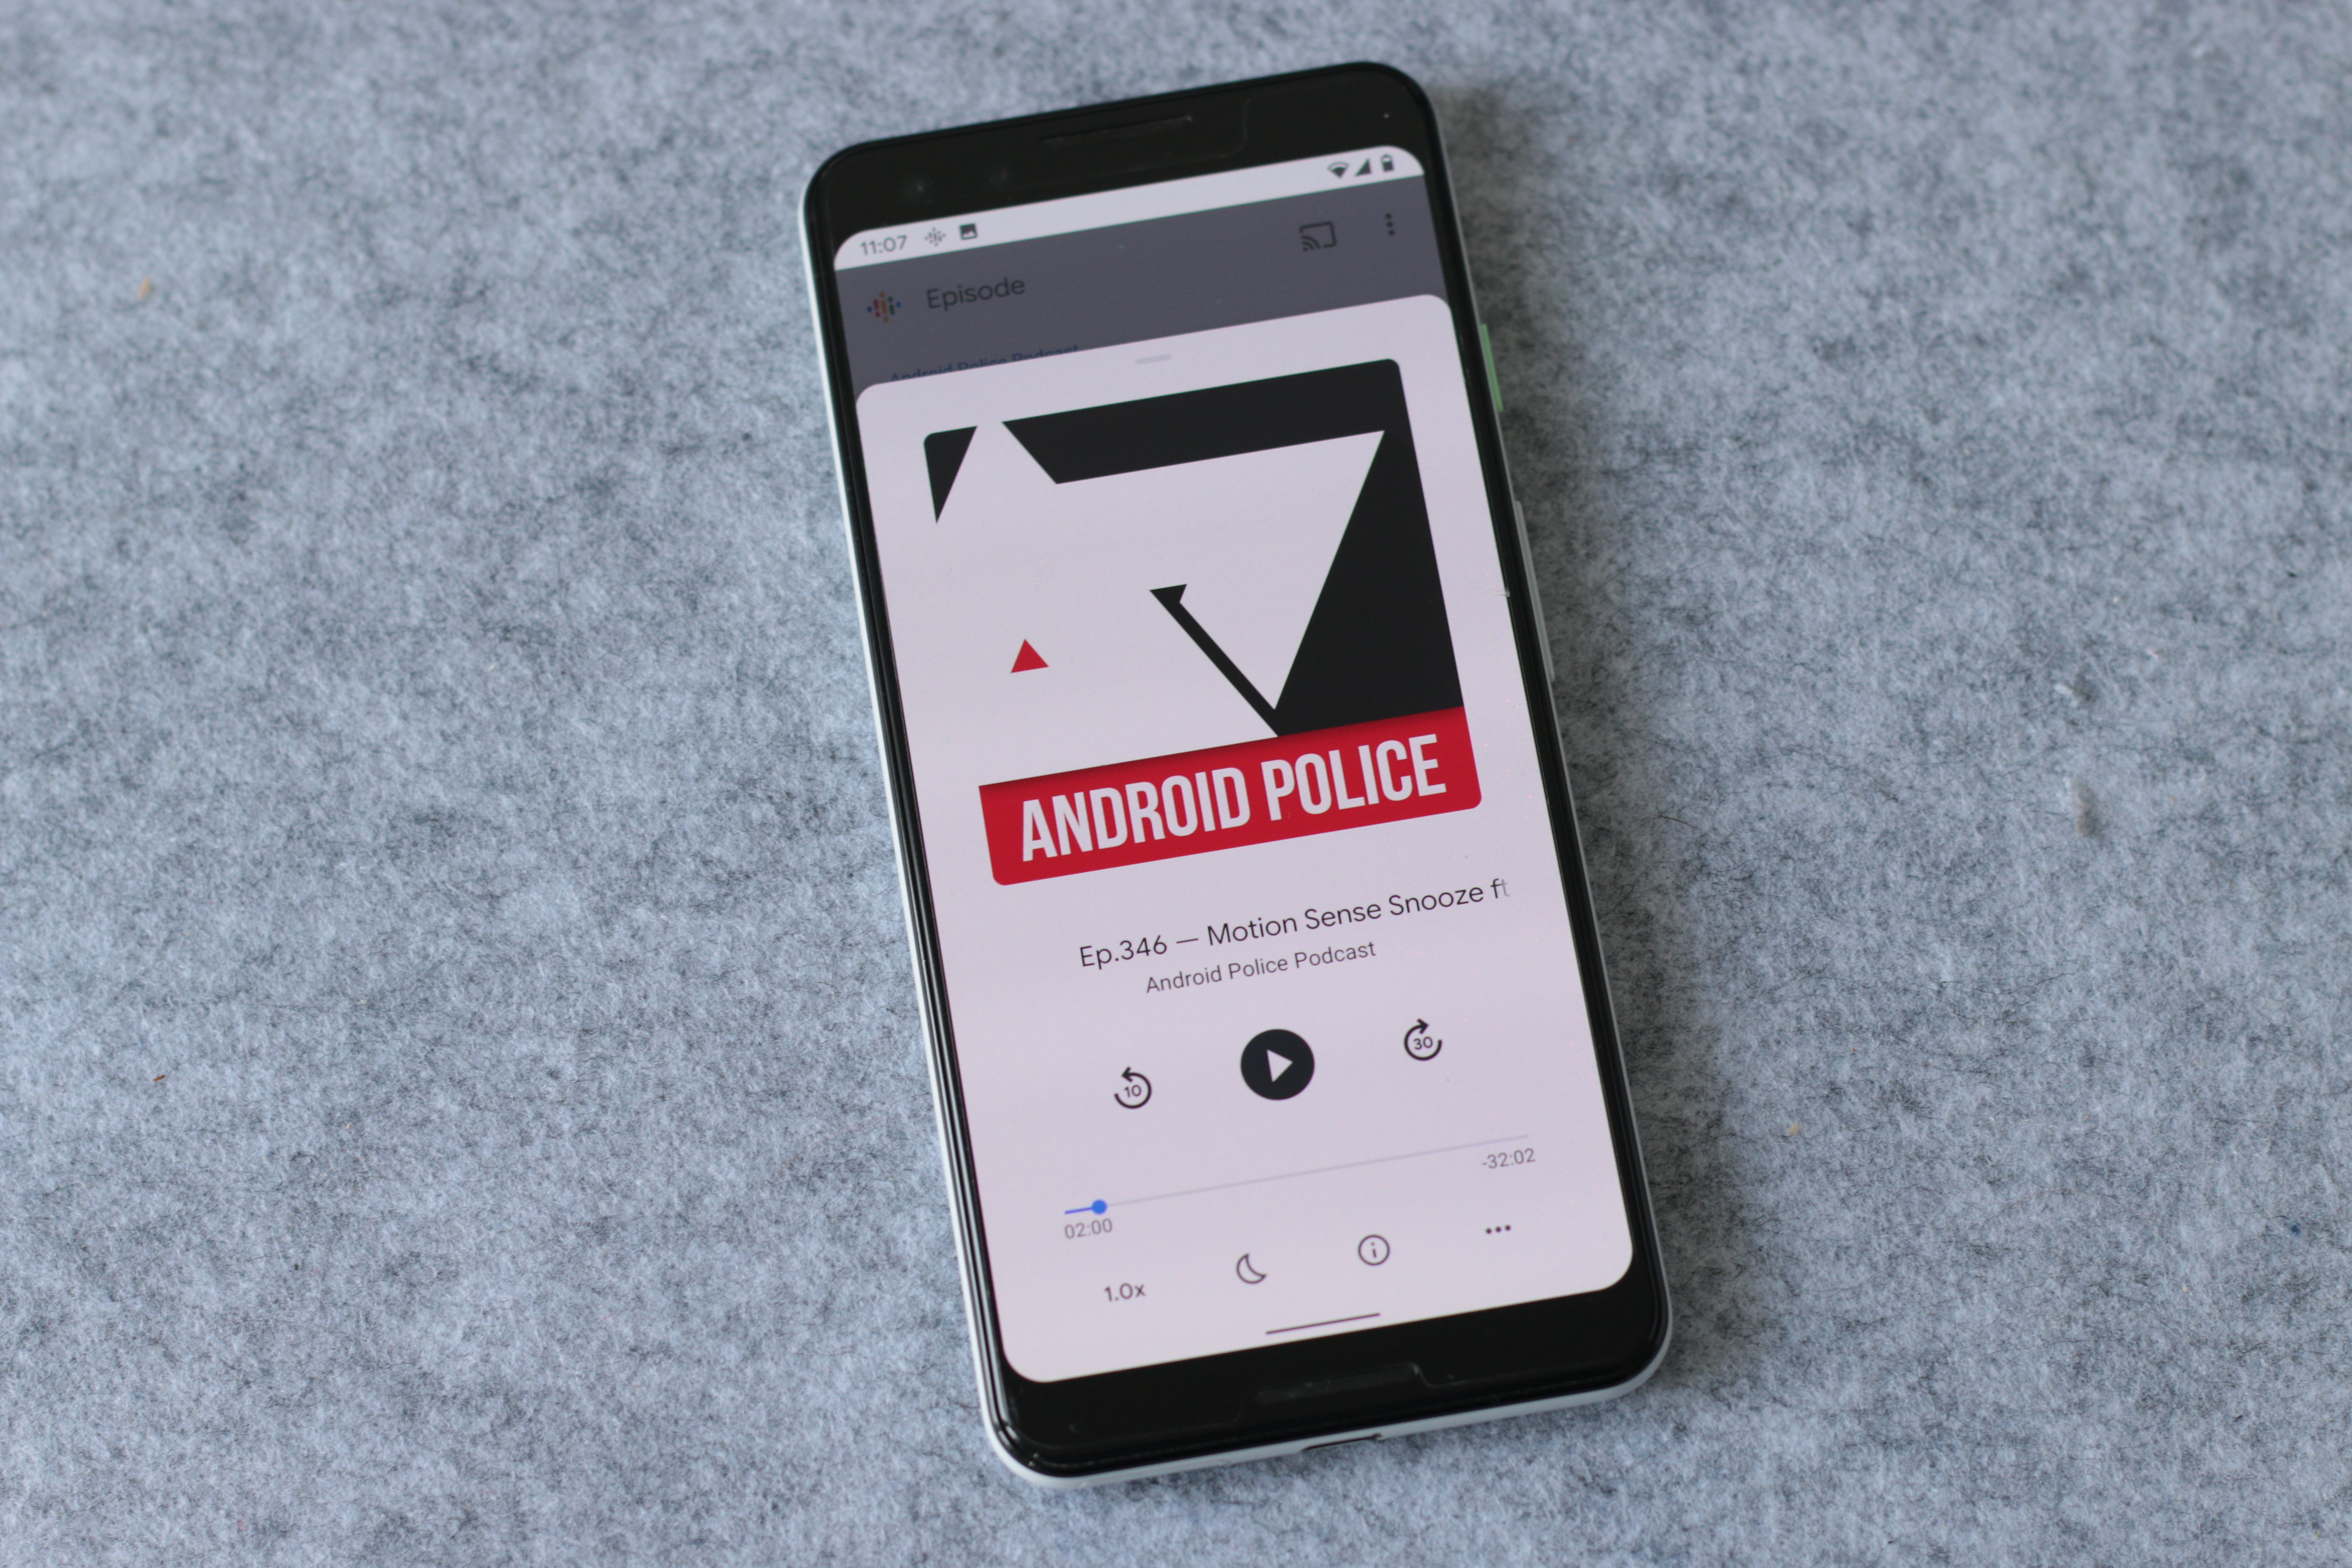 Google Podcasts na tela do telefone reproduzindo podcast do Android Police